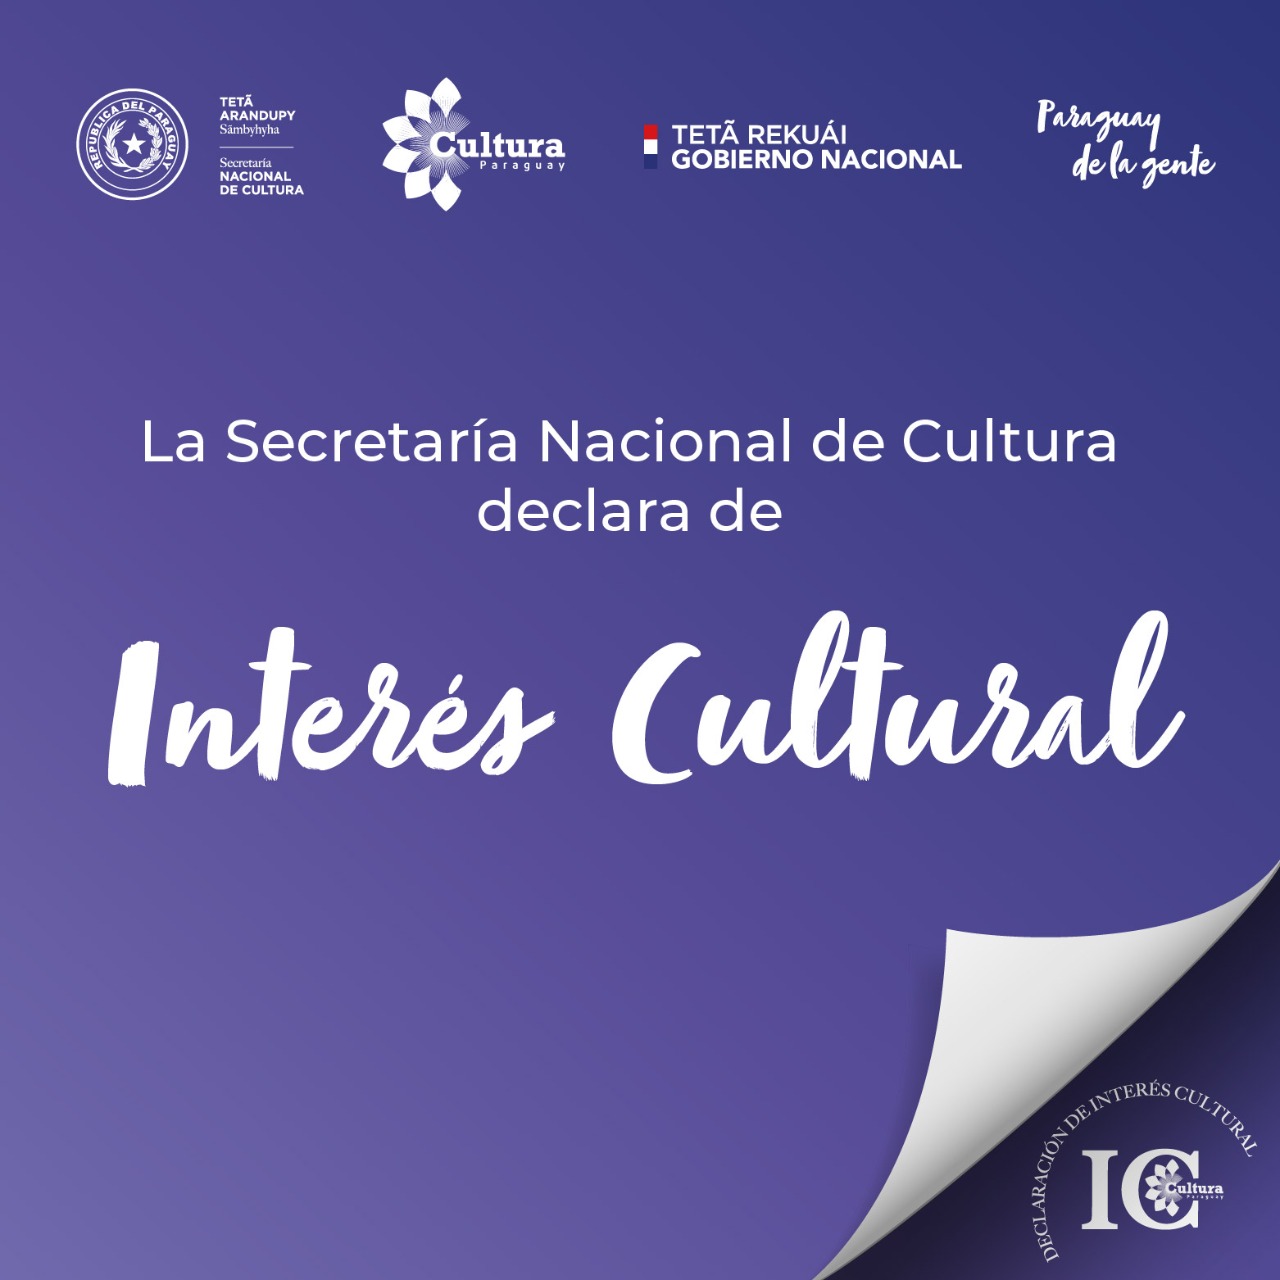 22° Feria del Libro Chacú Guaraníticase declarada de Interés Cultural por la SNC imagen